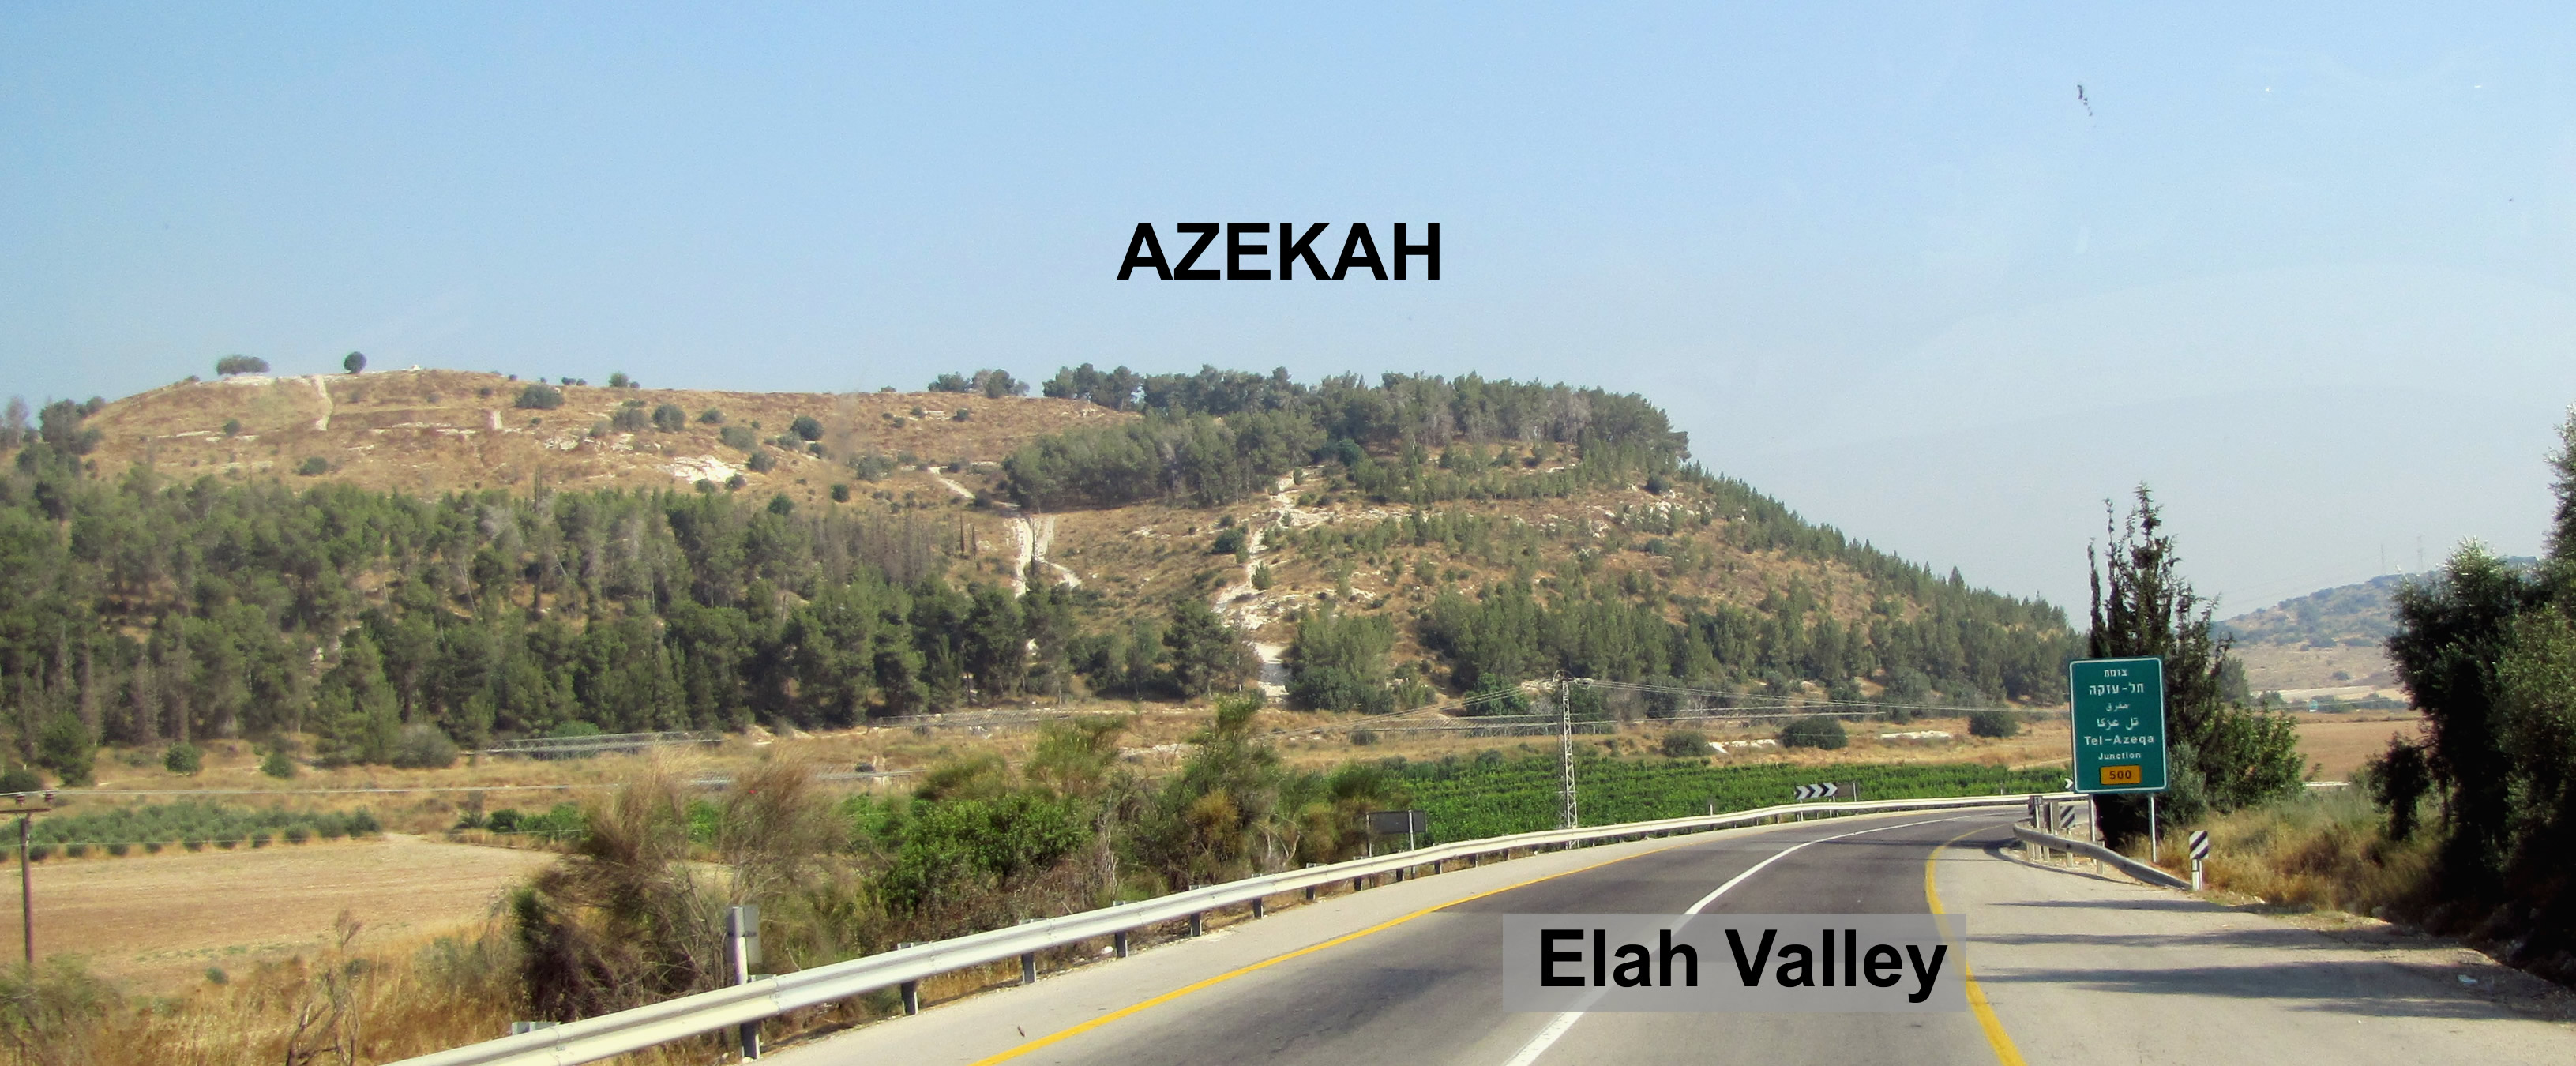 Azekah and Valley of Elah